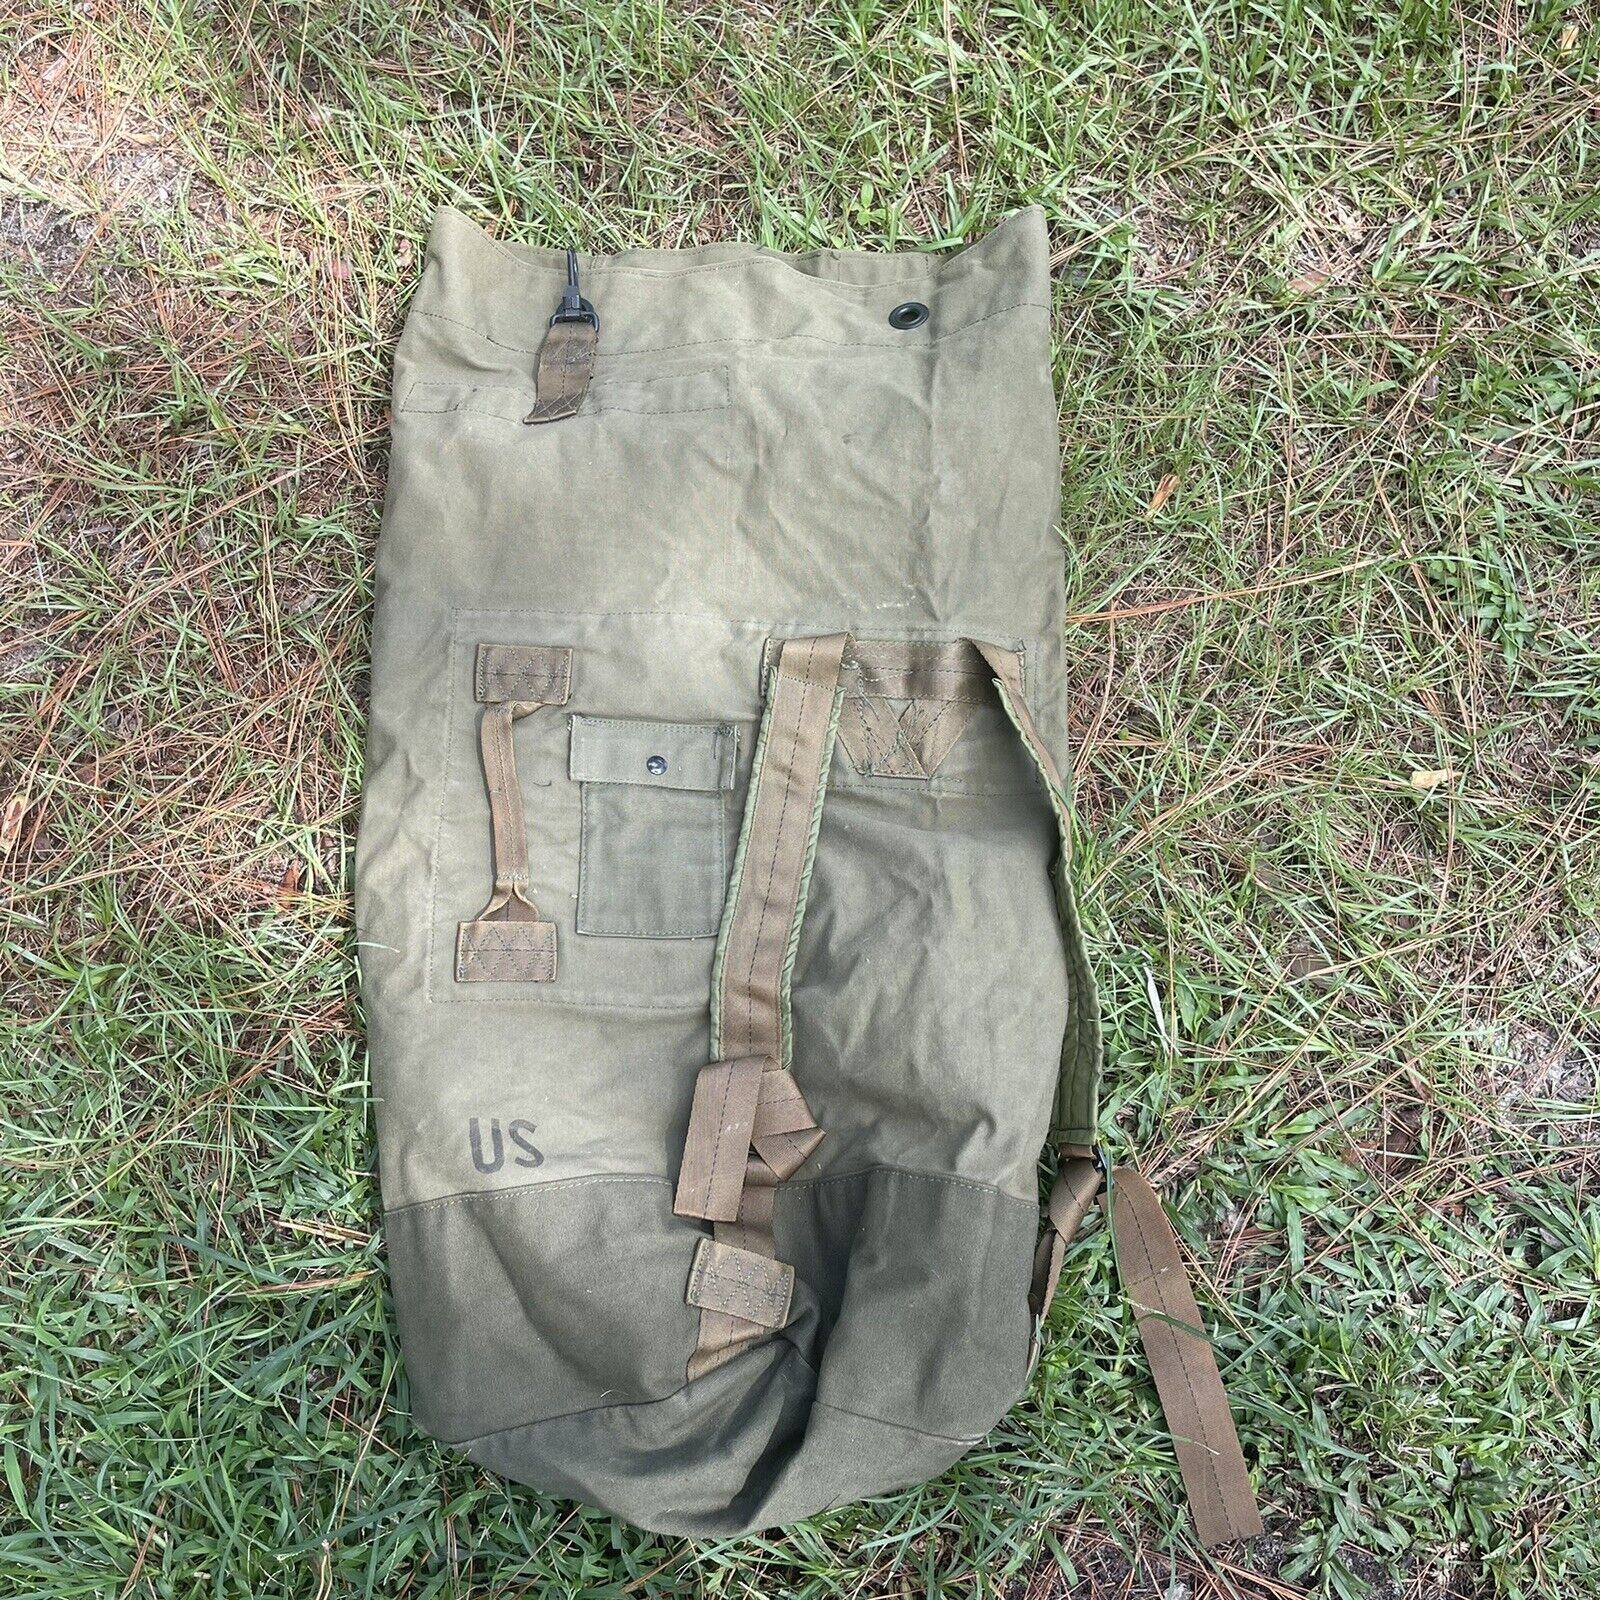 VTG US Military Duffle Deployment Bag DLA100-78-C 2 Strap Bag Type II W/2 STRAPS